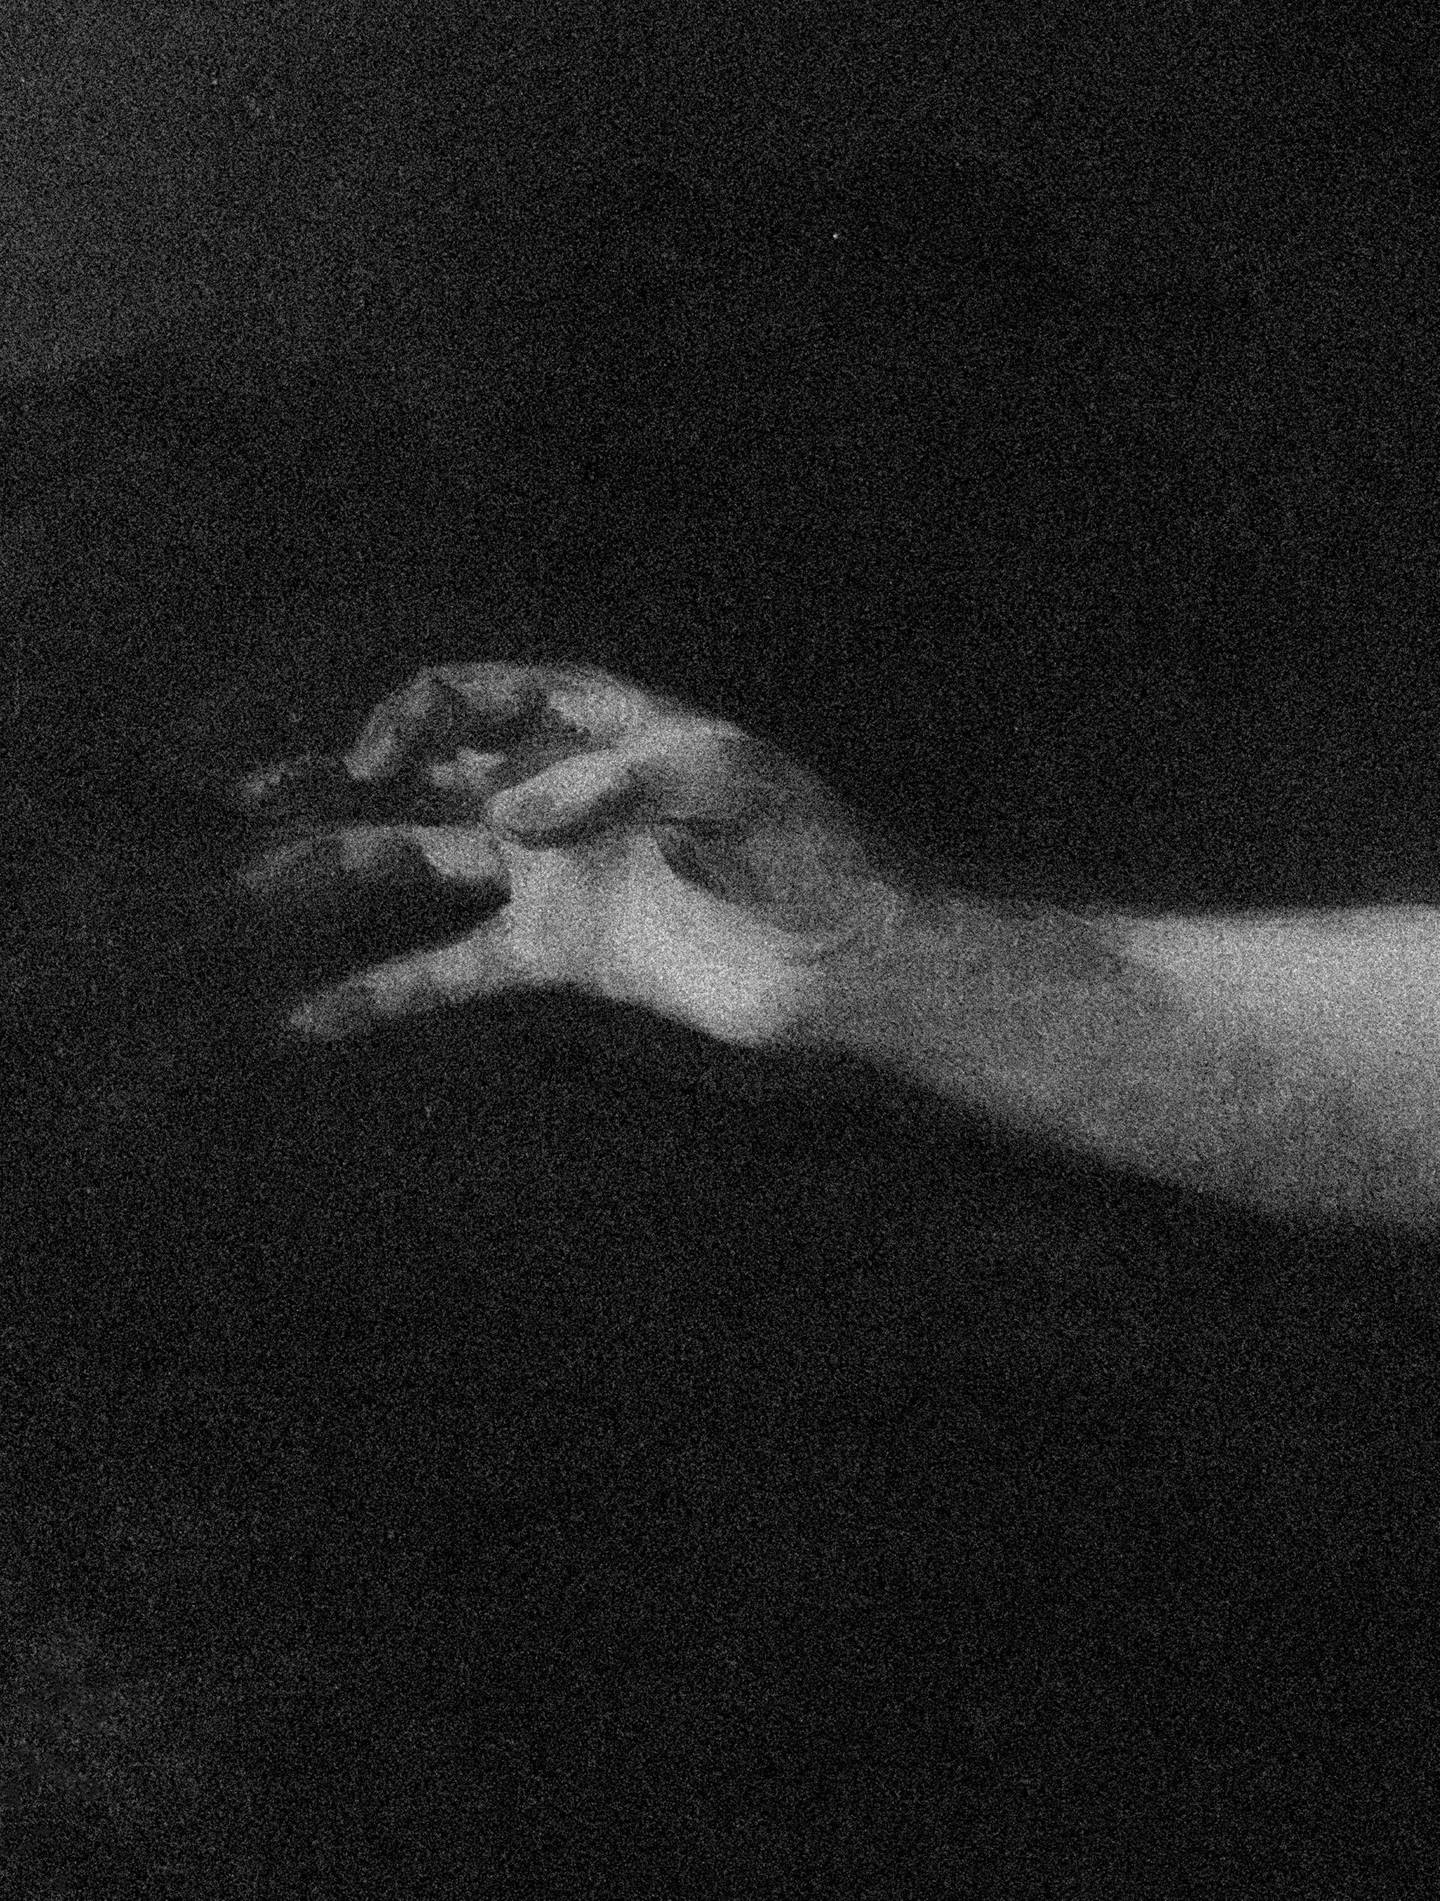 'Hand' by Stelios Kallinikou. Courtesy the artist and Grey Noise